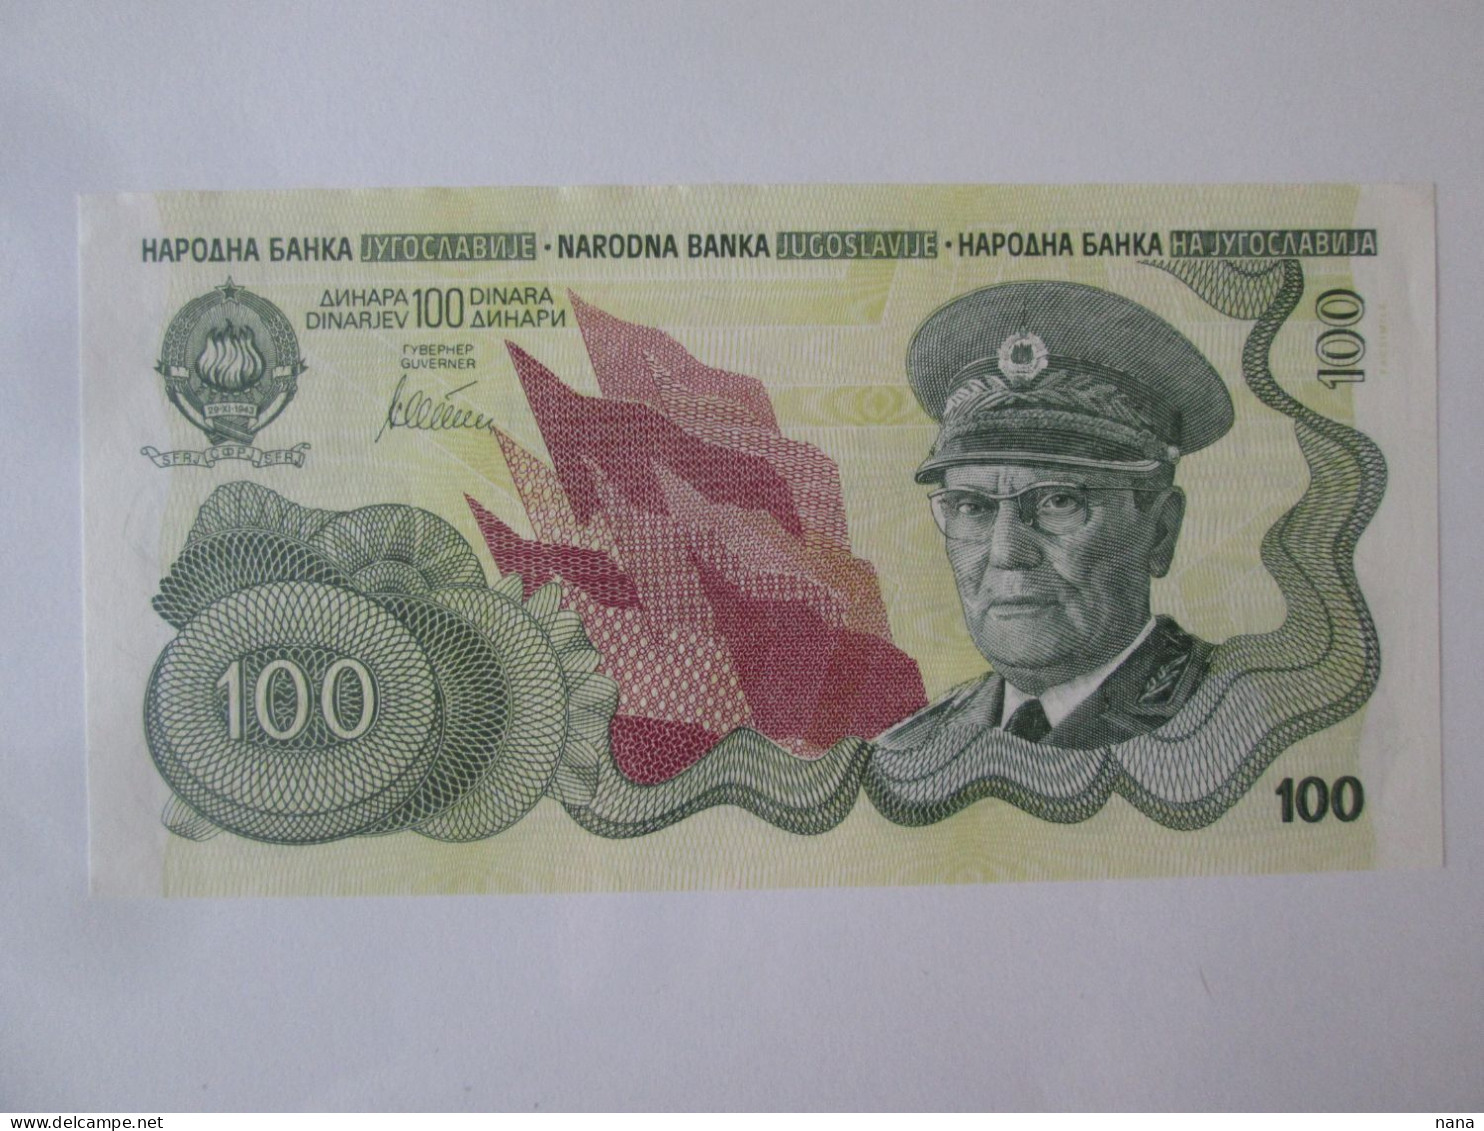 Yugoslavia 100 Dinara 2015 Emission Privee Limite/private Issue Limited Edition - Jugoslawien